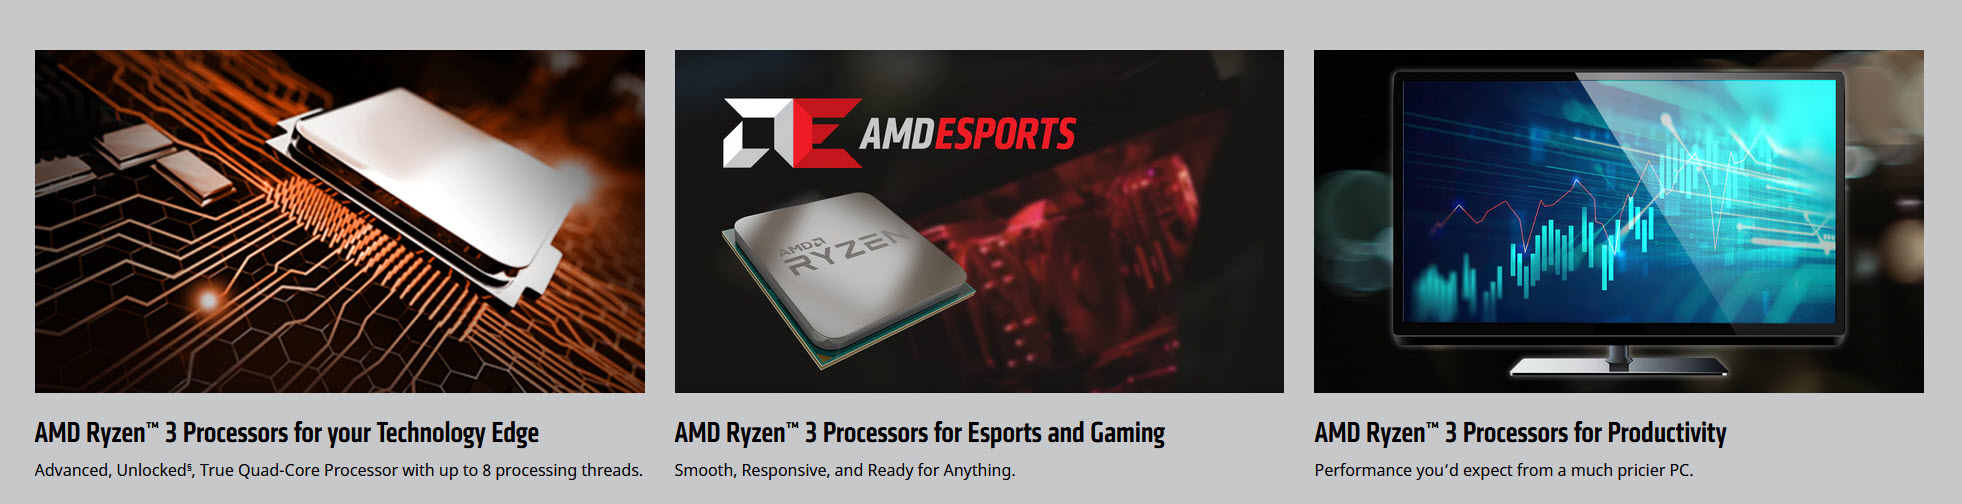 2020 04 21 23 13 49 AMD เปิดตัวโปรเซสเซอร์ใหม่ตระกูล 3rd Gen AMD Ryzen™ Desktop Processor ในรุ่น AMD Ryzen 3 3100 และ AMD Ryzen 3 3300X พร้อมประสิทธิภาพด้วยคอร์ประมวลผล “Zen2” สำหรับงานระดับเมนสตรีมและมาพร้อมเมนบอร์ดชิปเซ็ต AMD B550 รุ่นใหม่ล่าสุด  